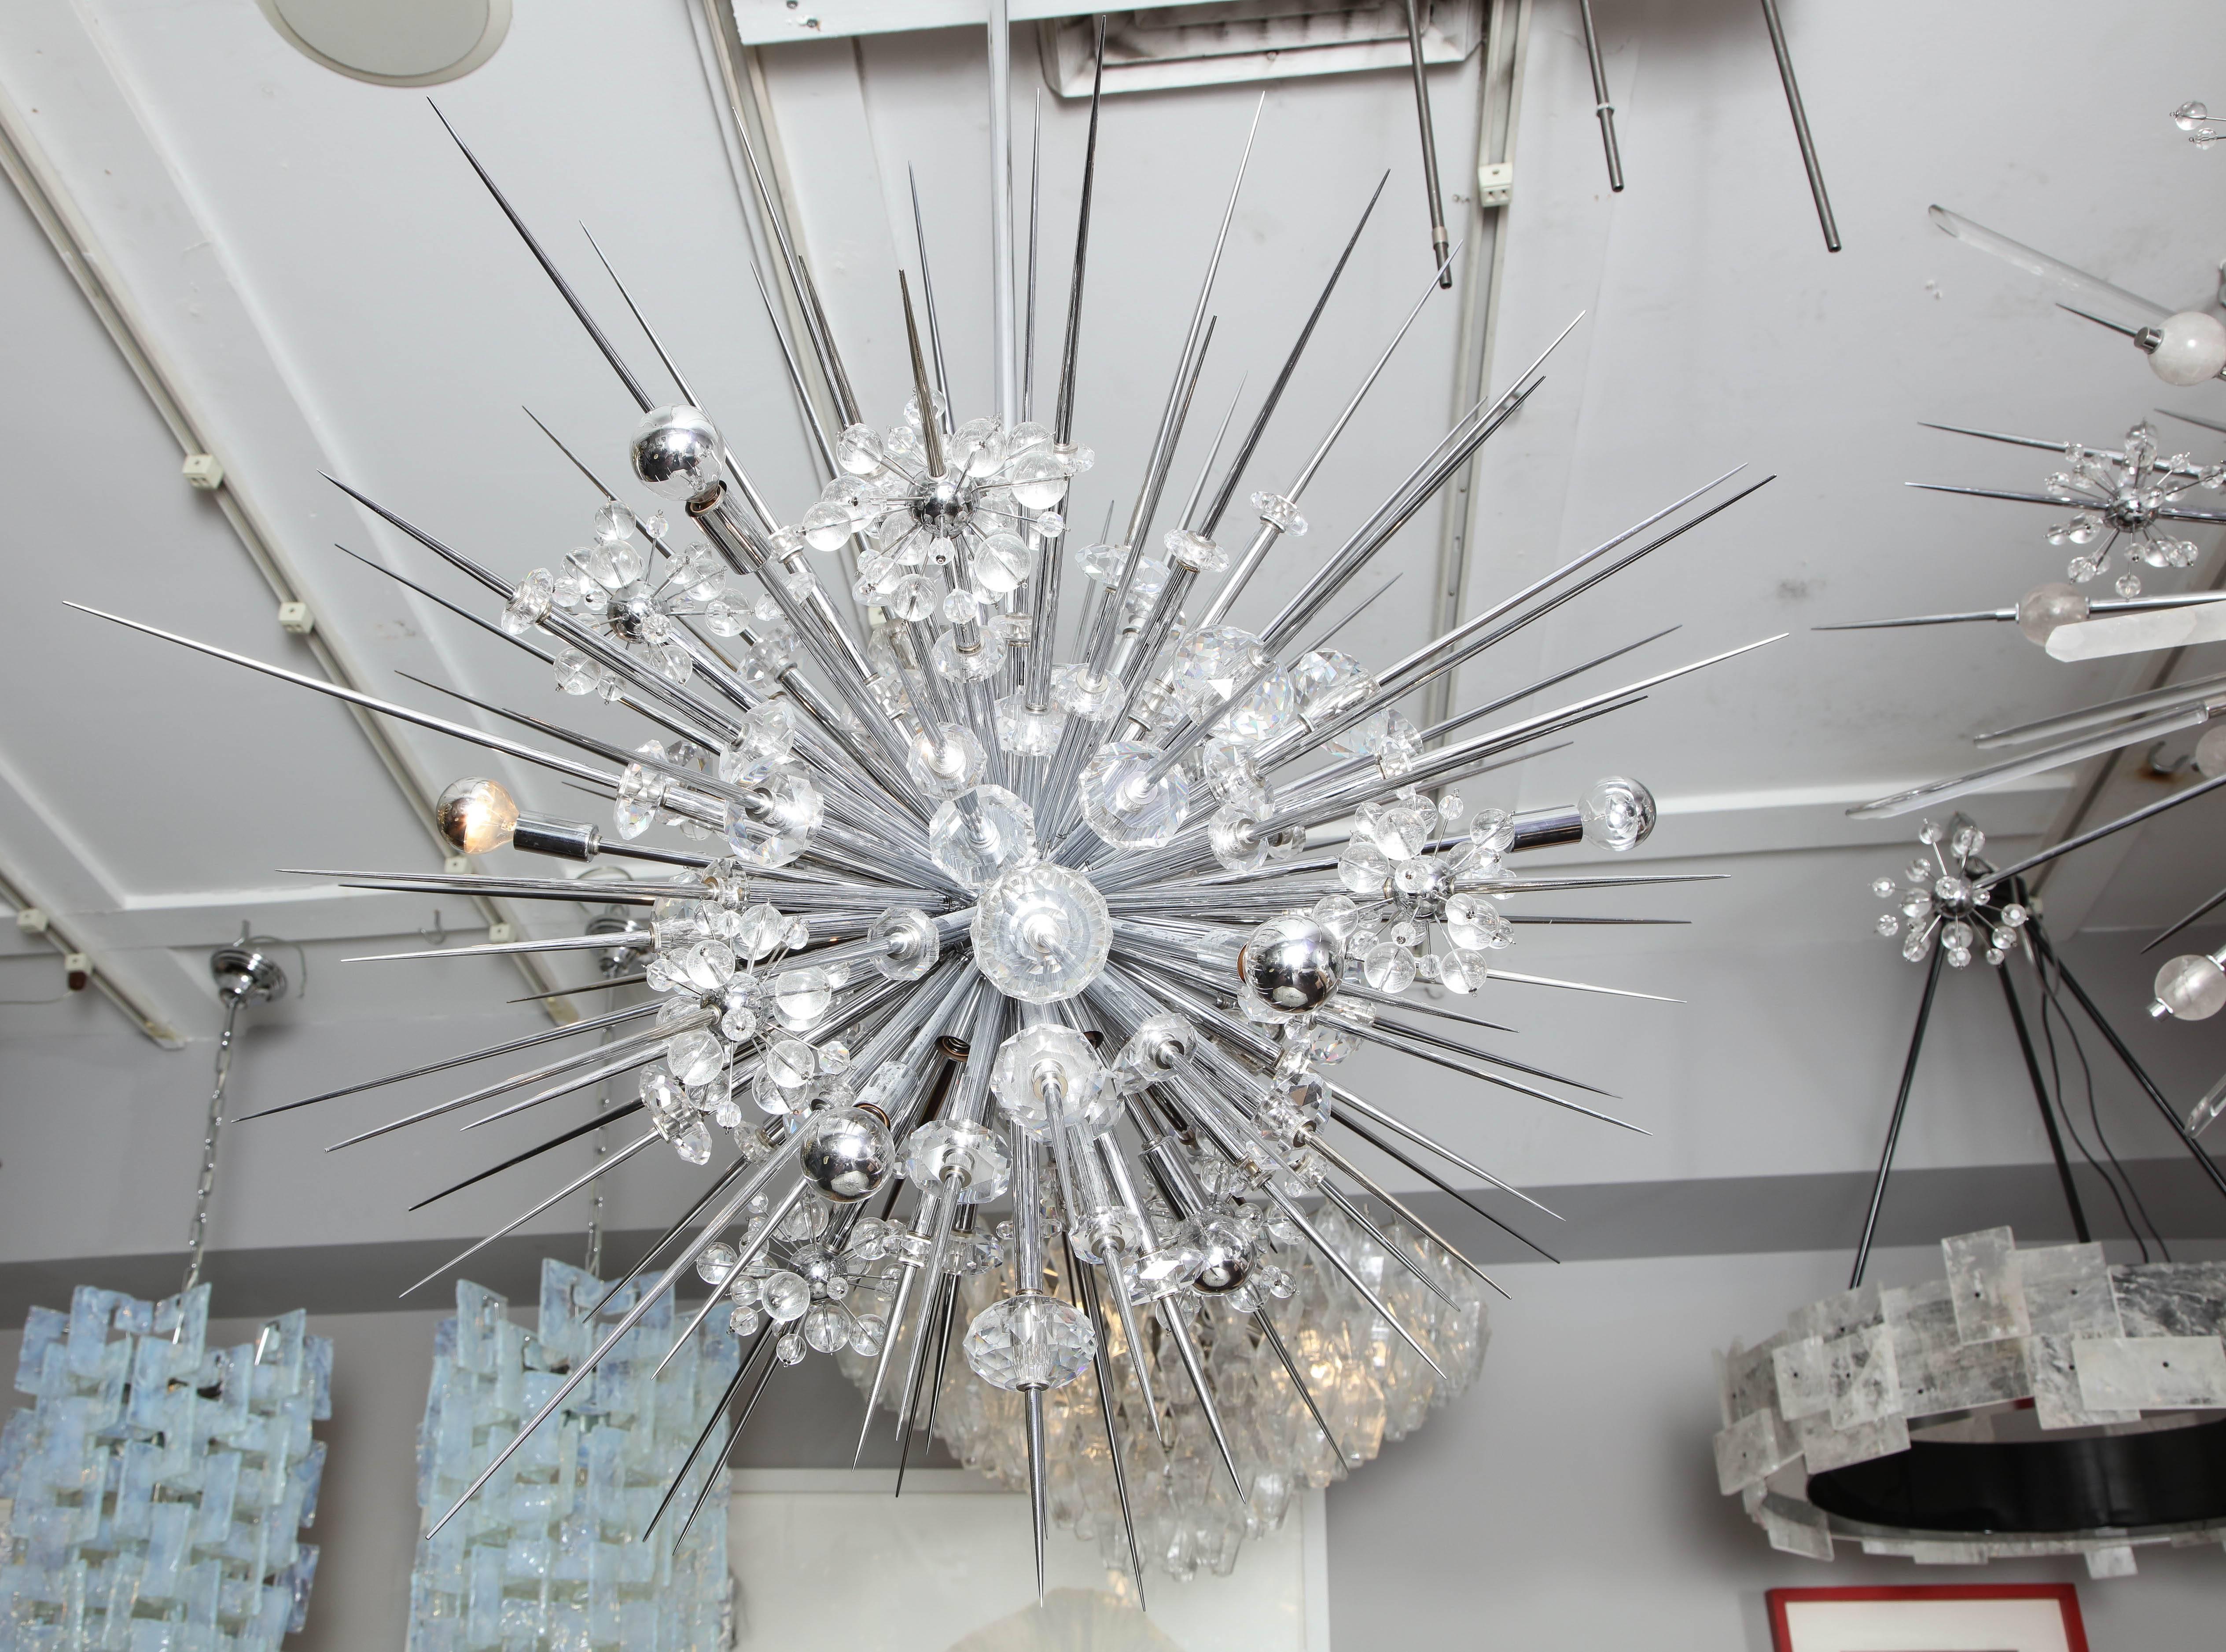 Glamorous custom Austrian crystal and polished nickel spiked Sputnik chandelier.